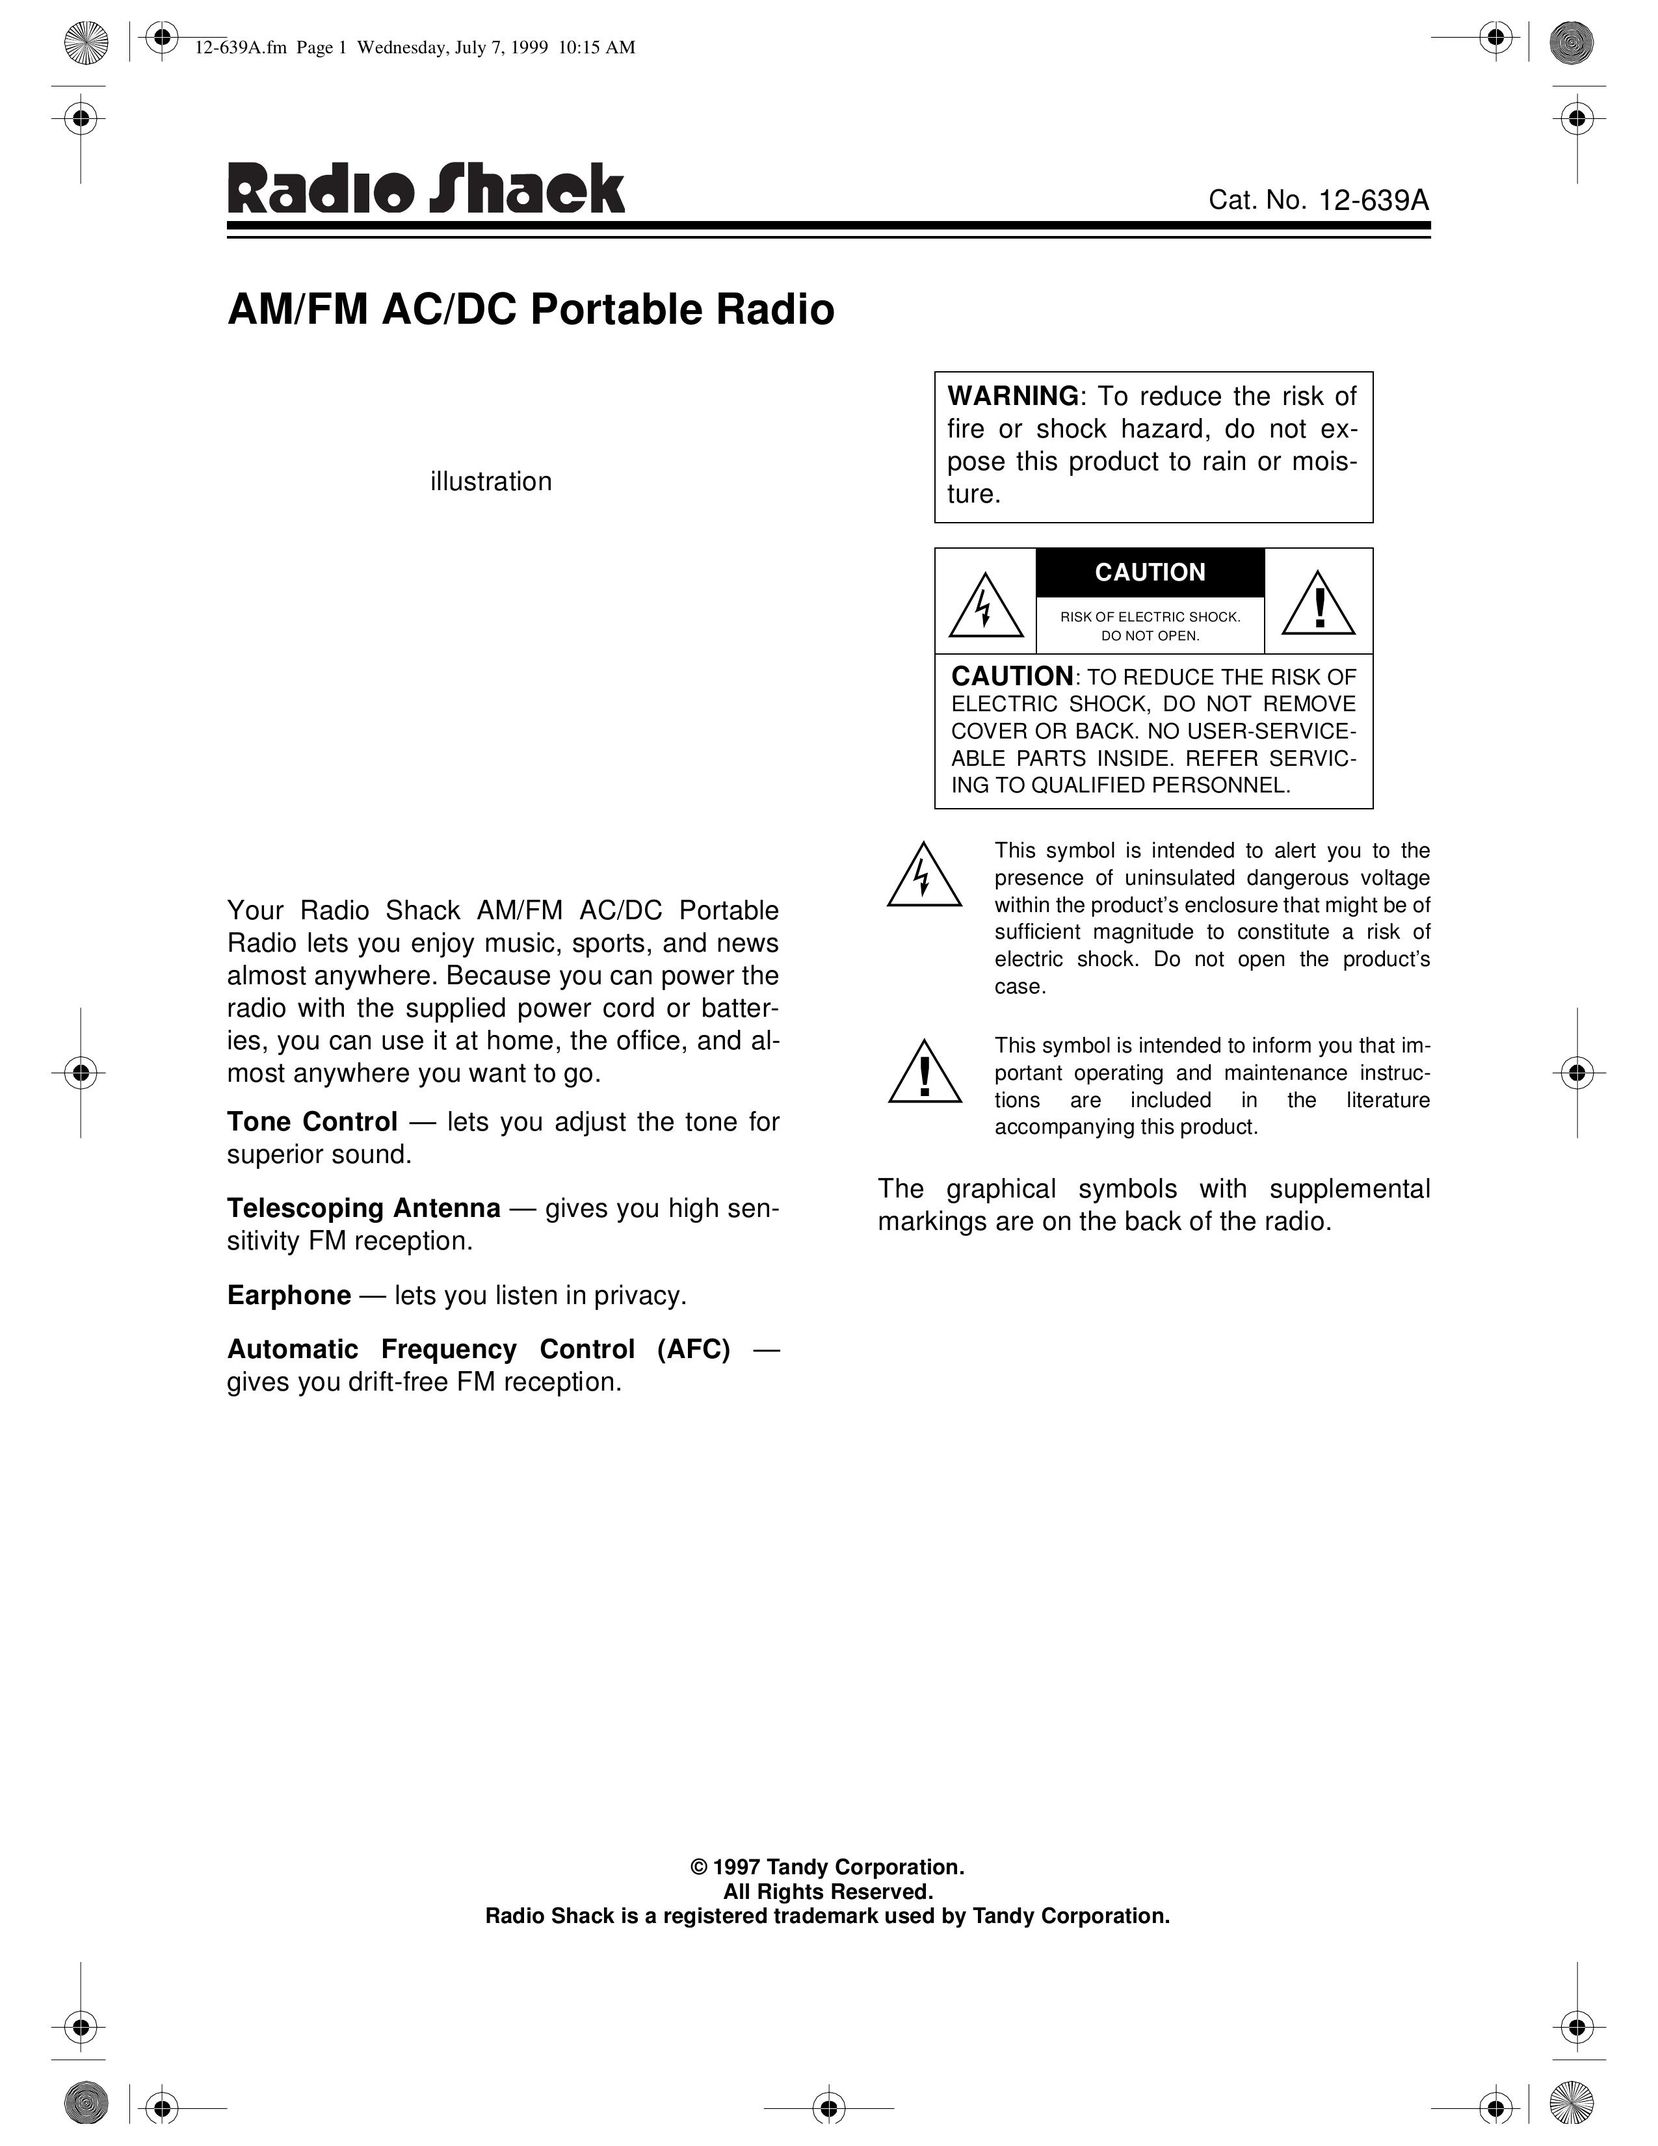 Radio Shack 12-639A Portable Radio User Manual